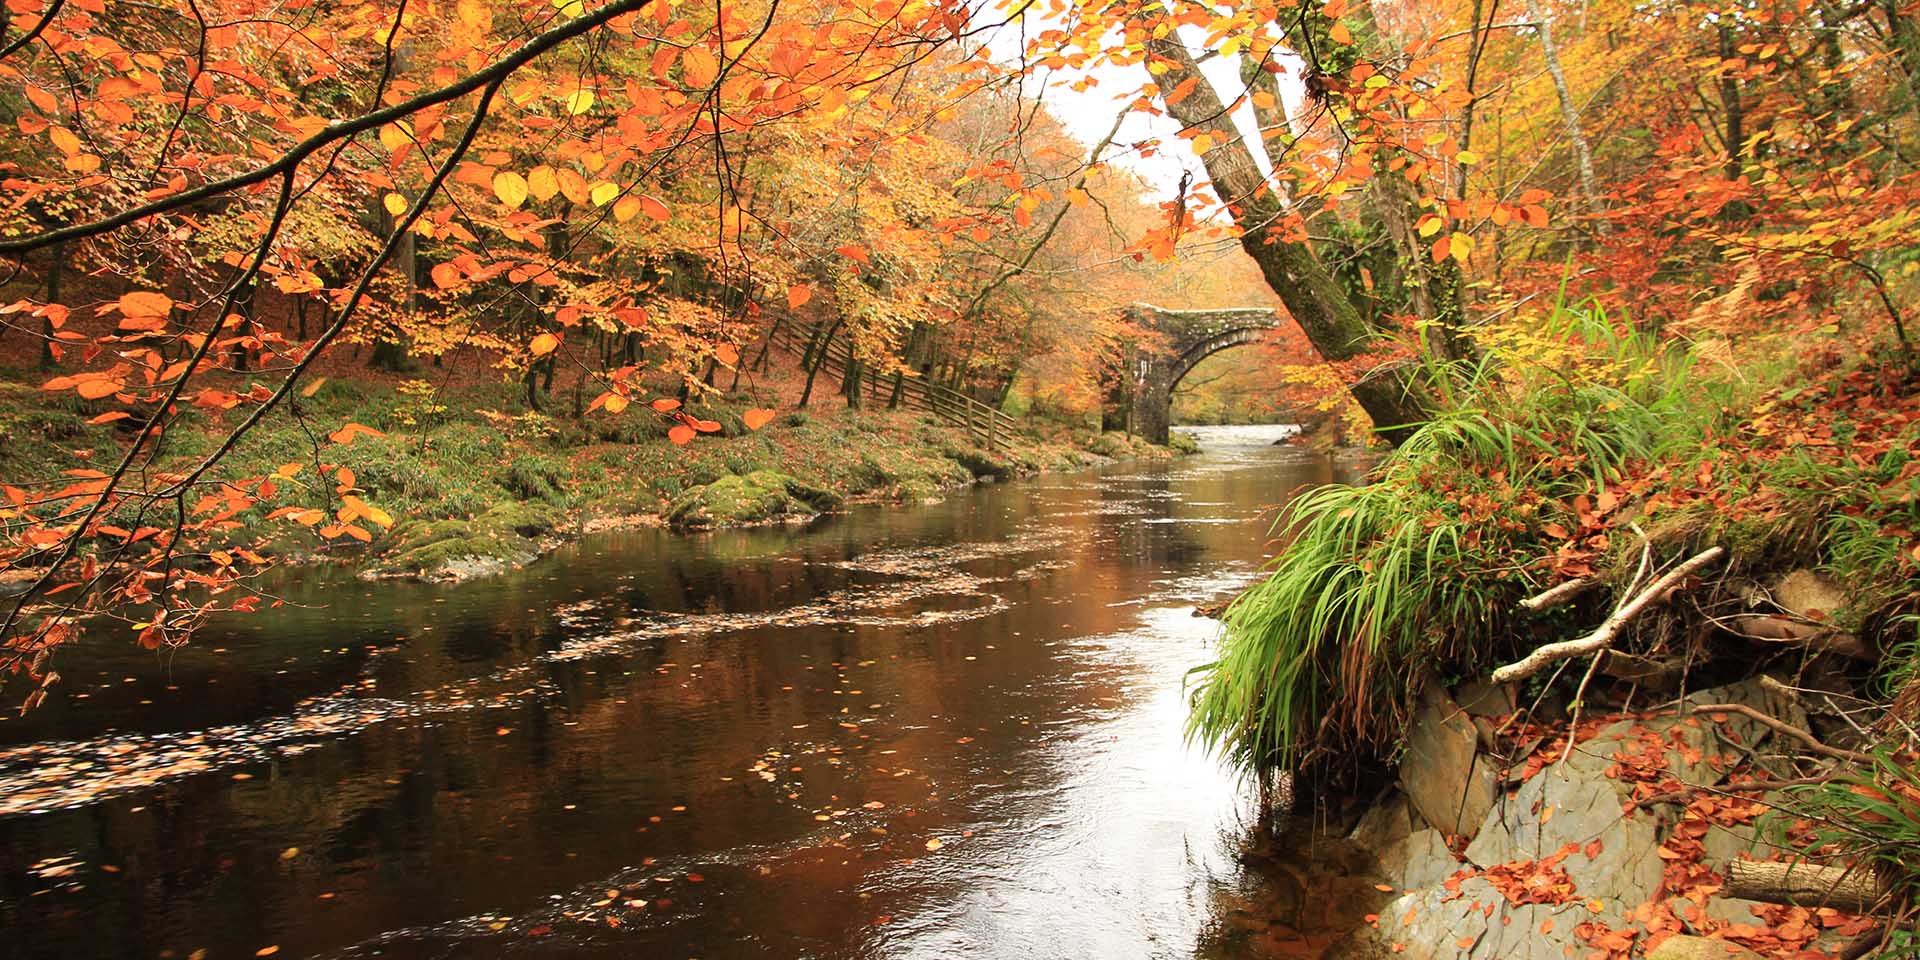 River Dart in autumn